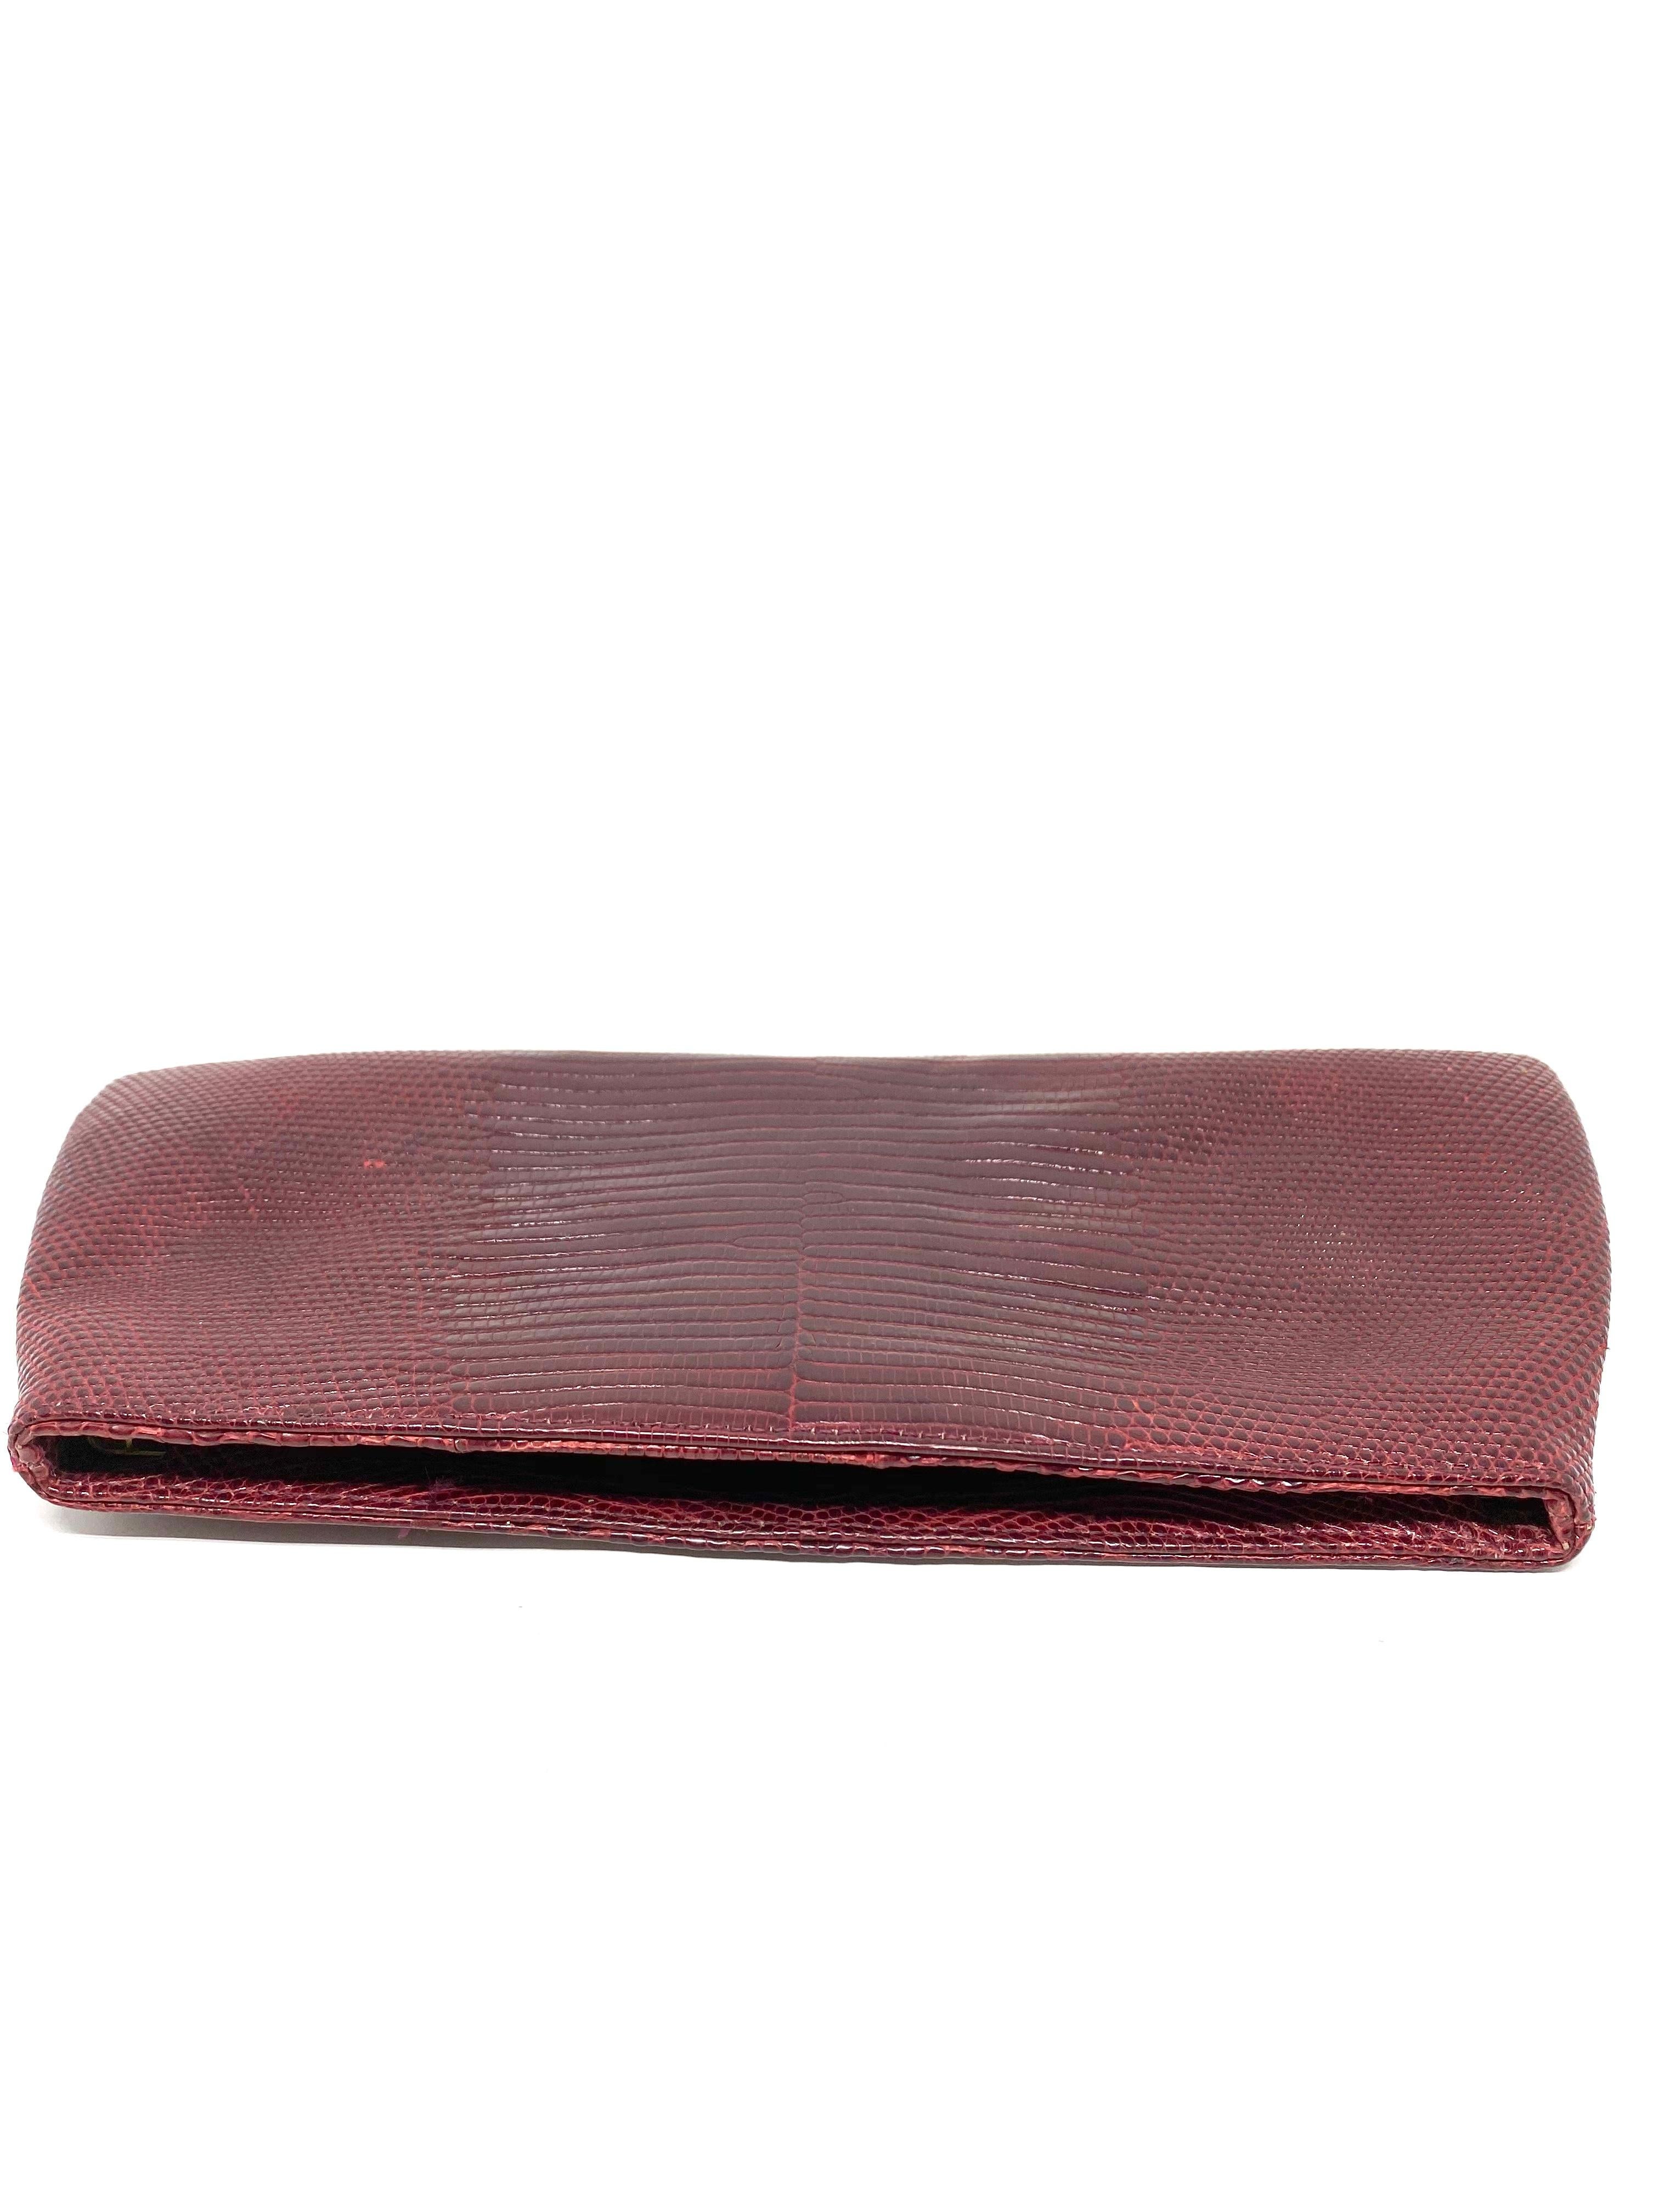 Brown Vintage Brigette Romanek Red Lizard Leather Clutch Evening Purse For Sale